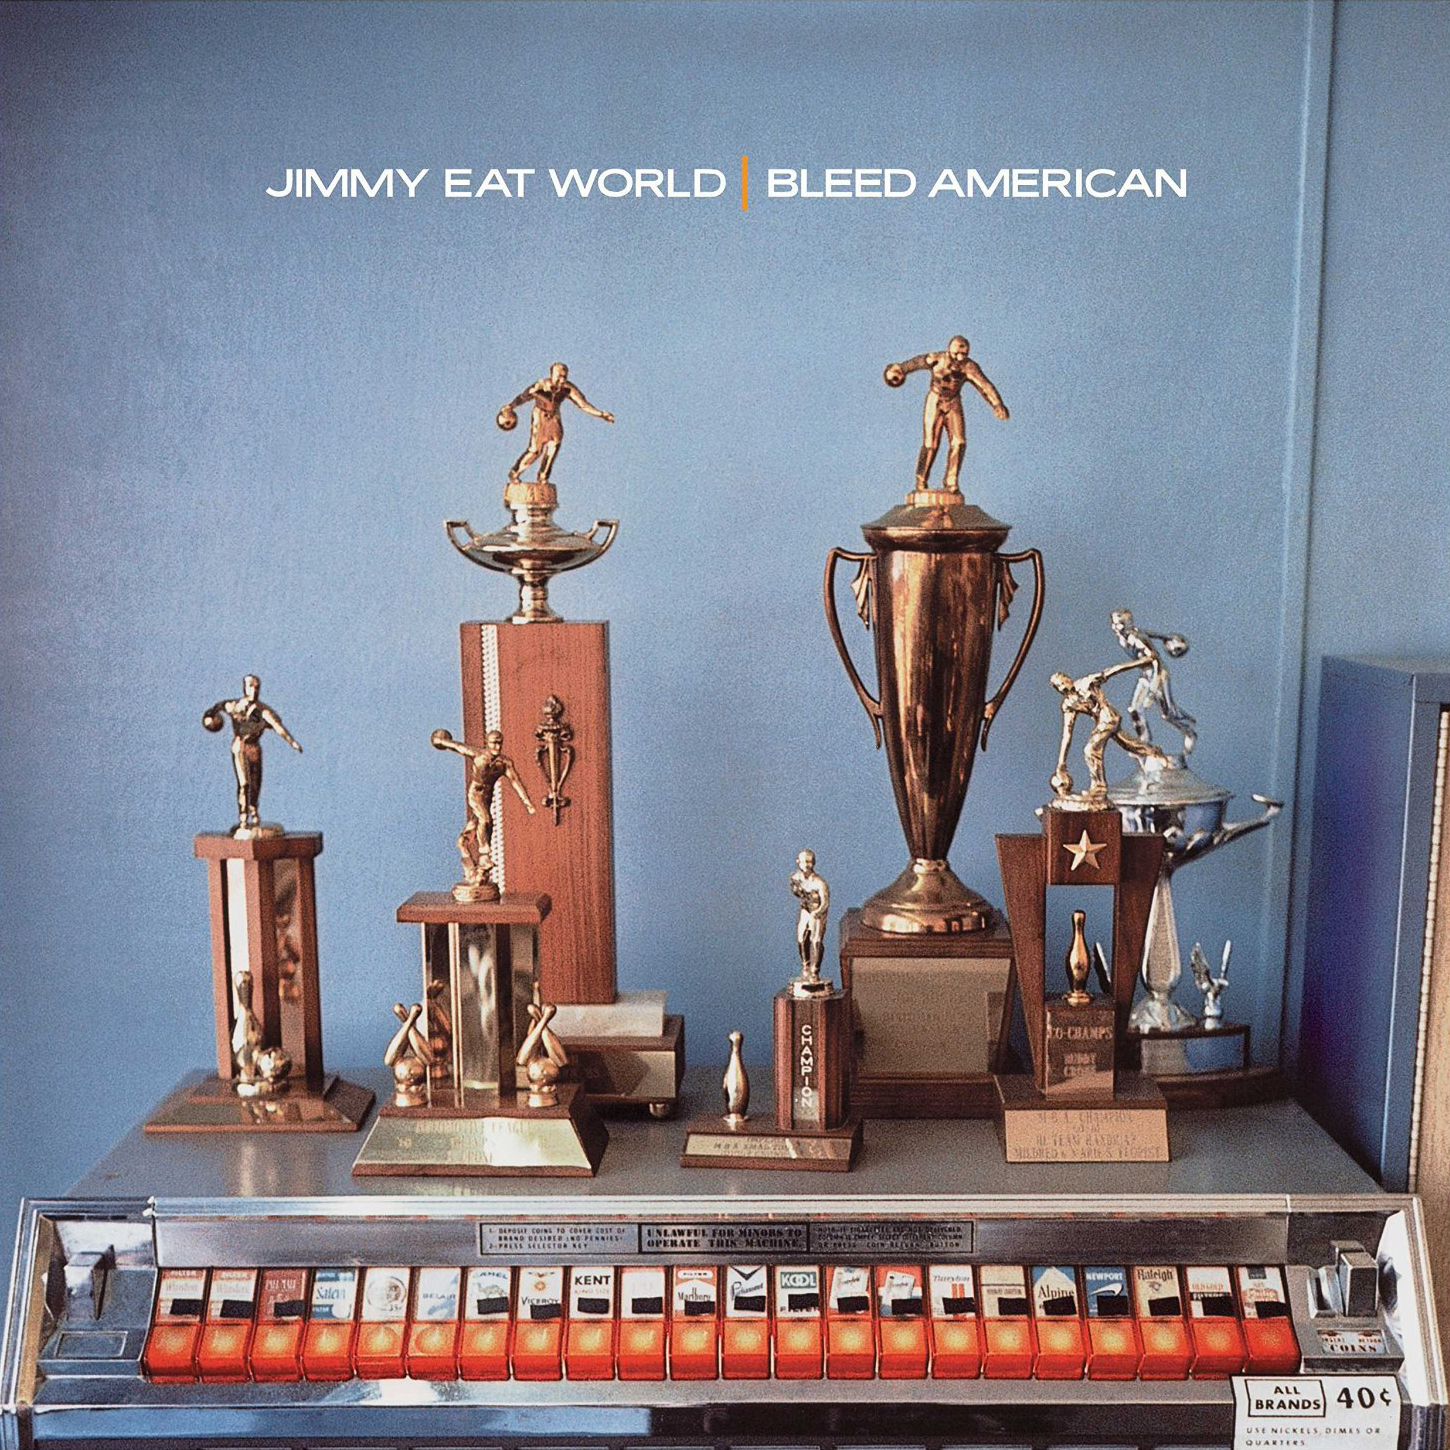 Jimmy Eat World's Bleed American